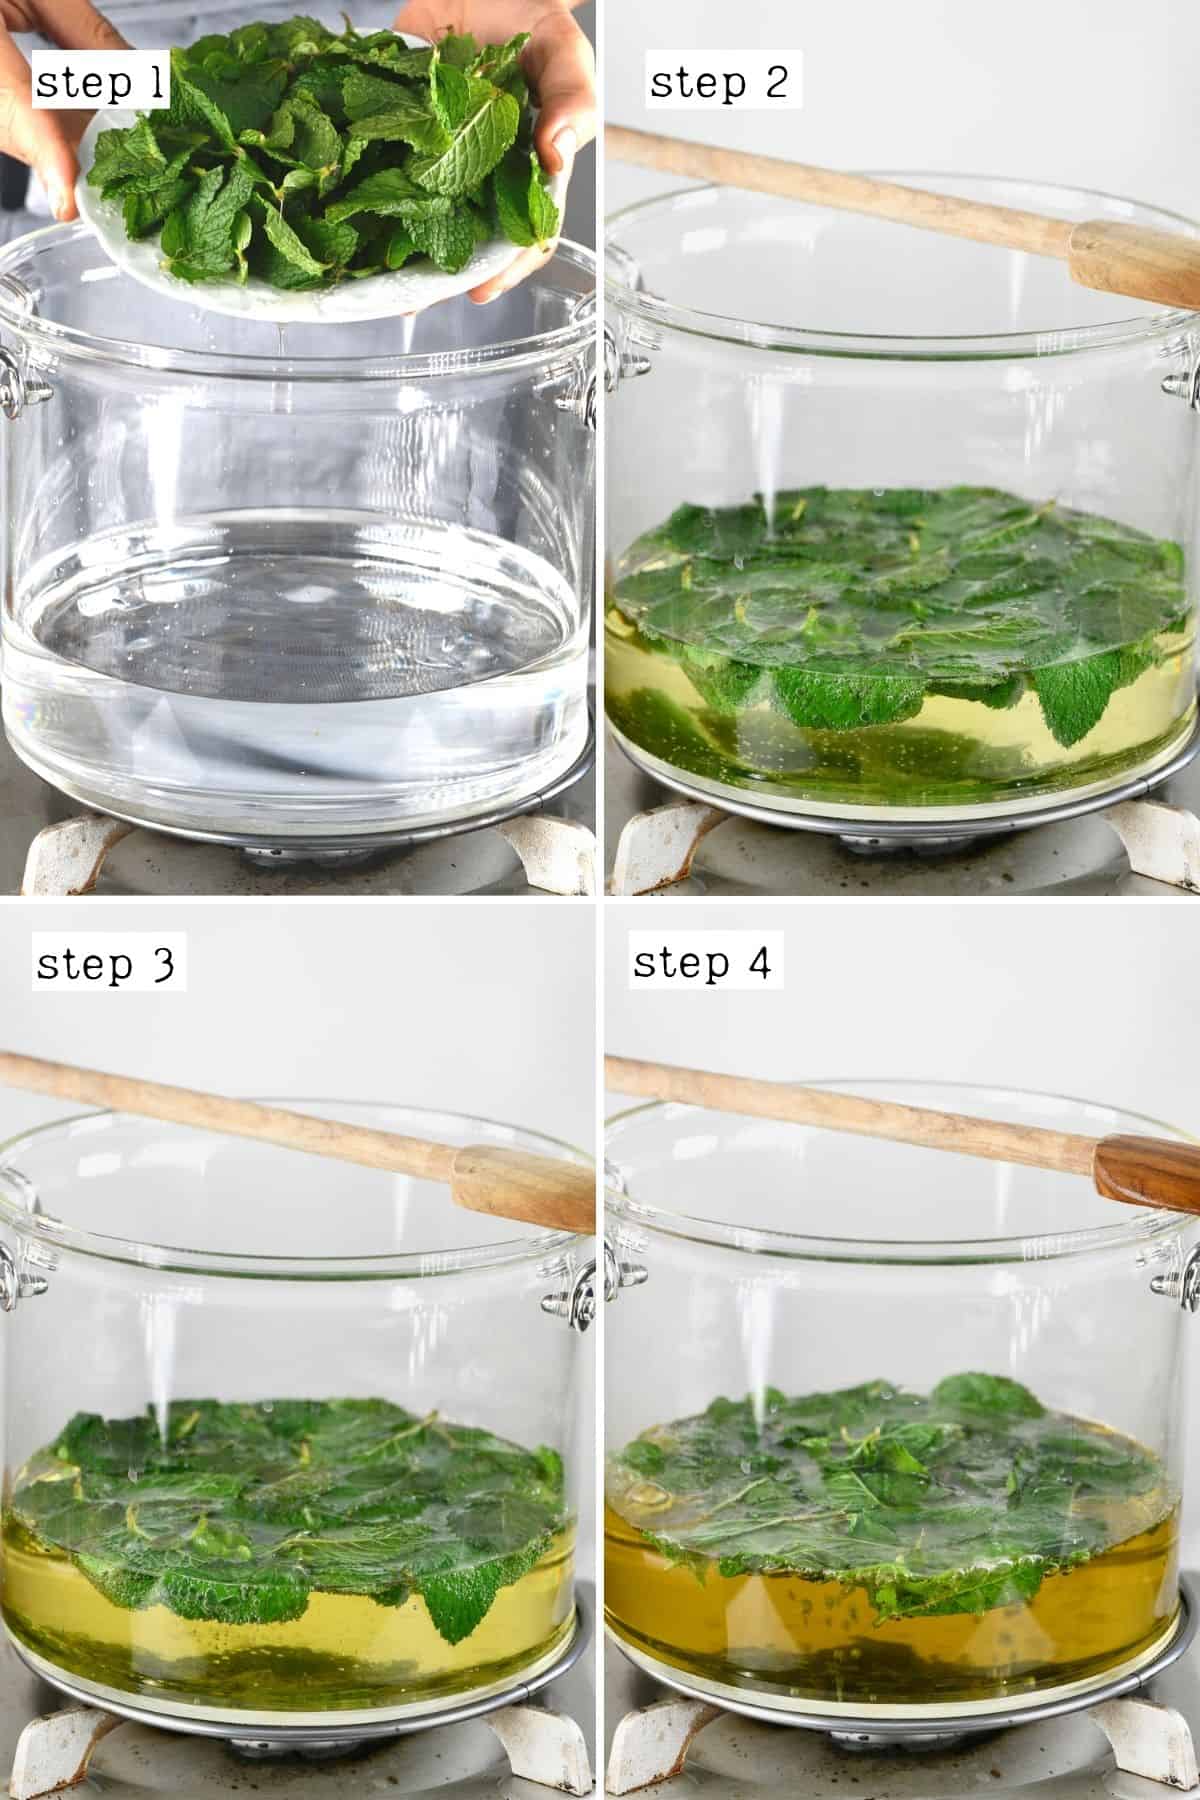 Steps for making mint tea